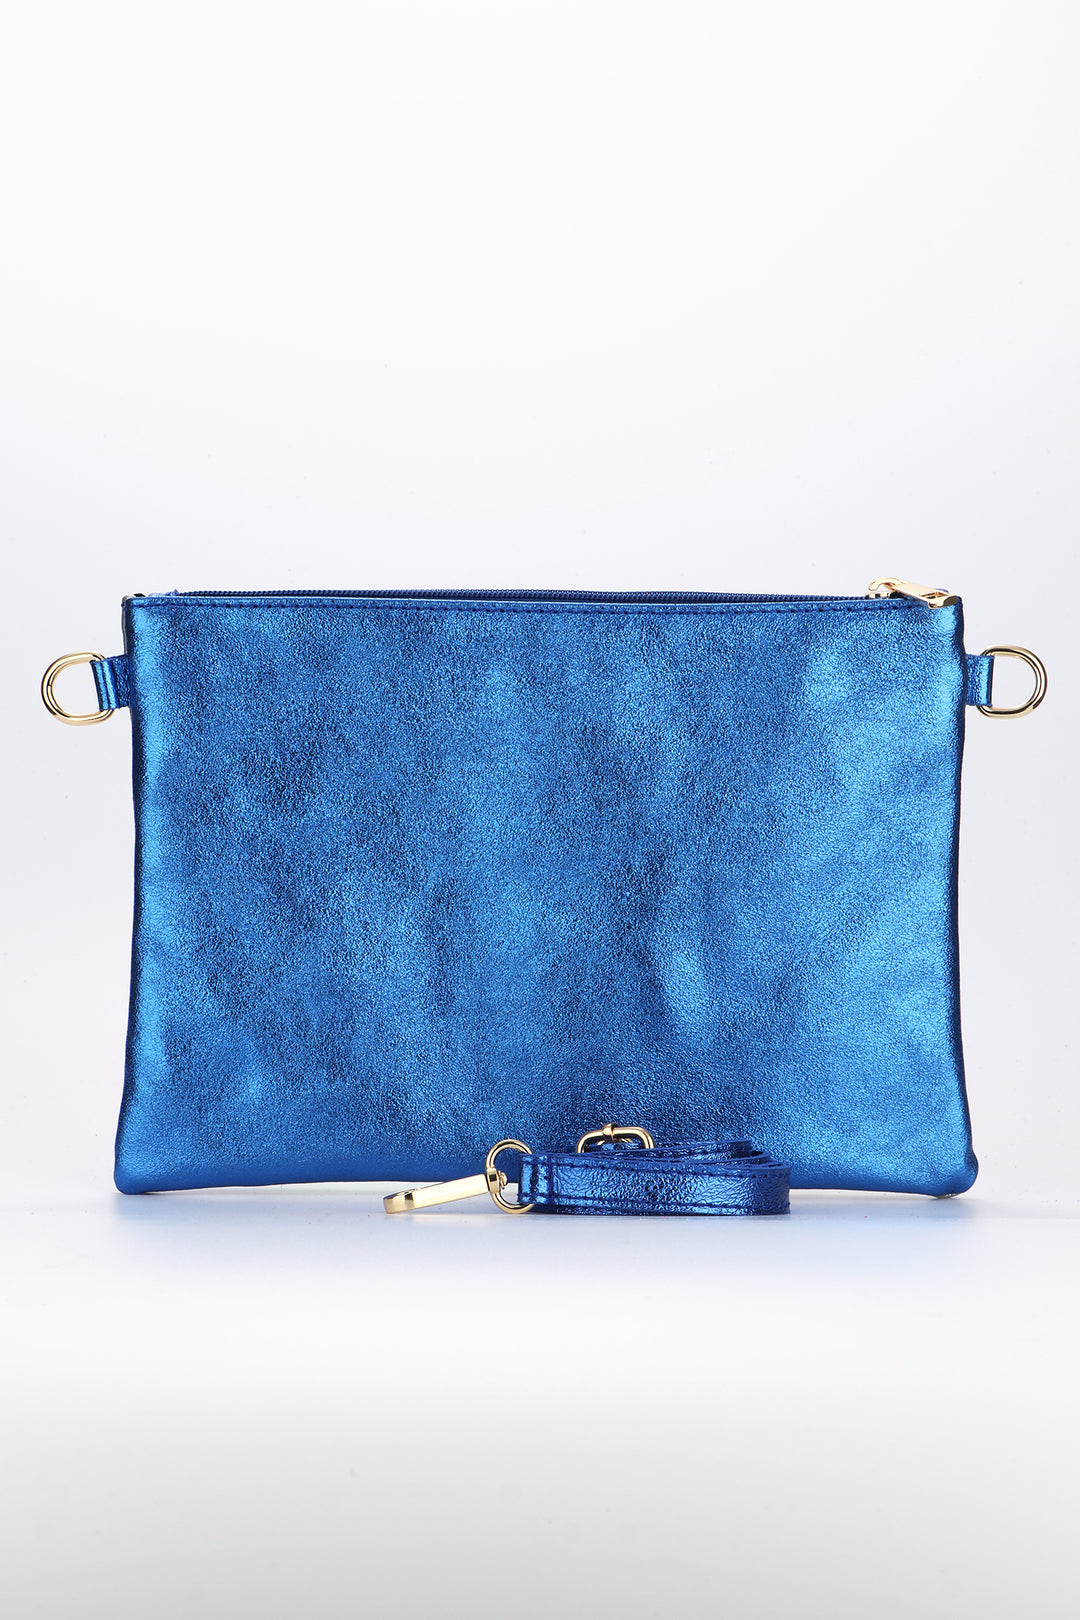 Metallic Royal Blue Large Leather Wristlet Clutch Bag